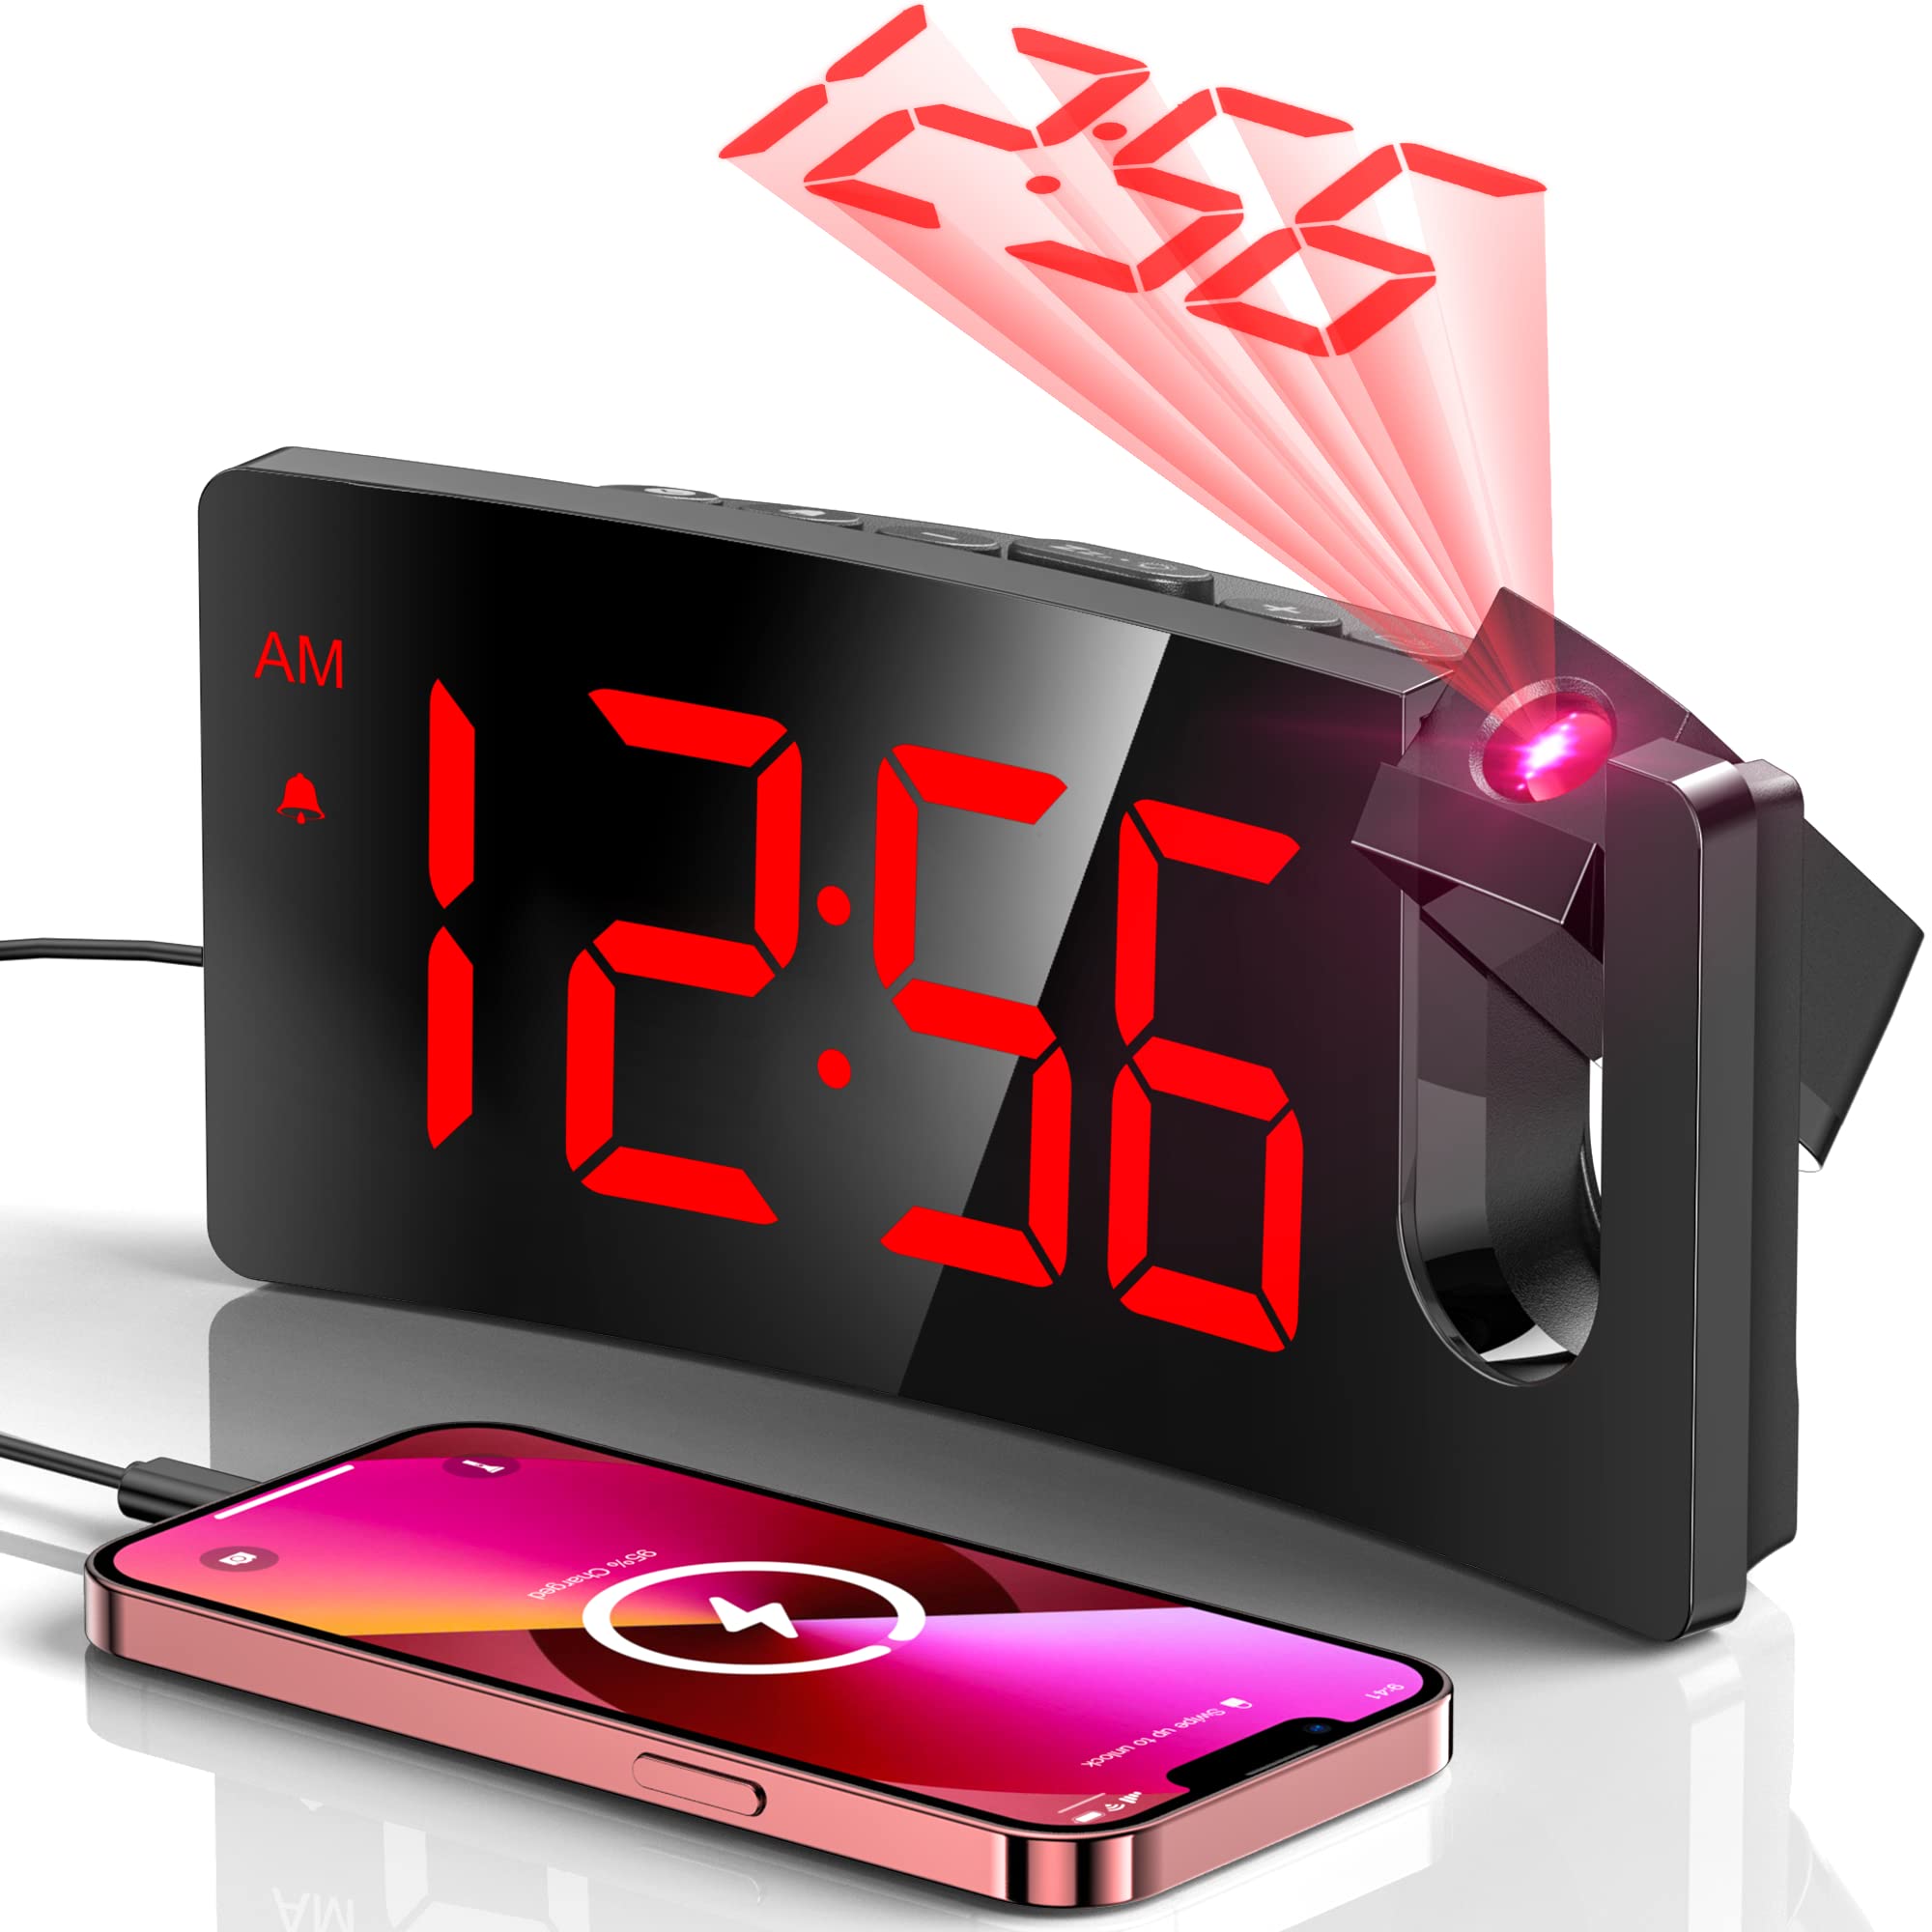 GOLOZA Projection Alarm Clock